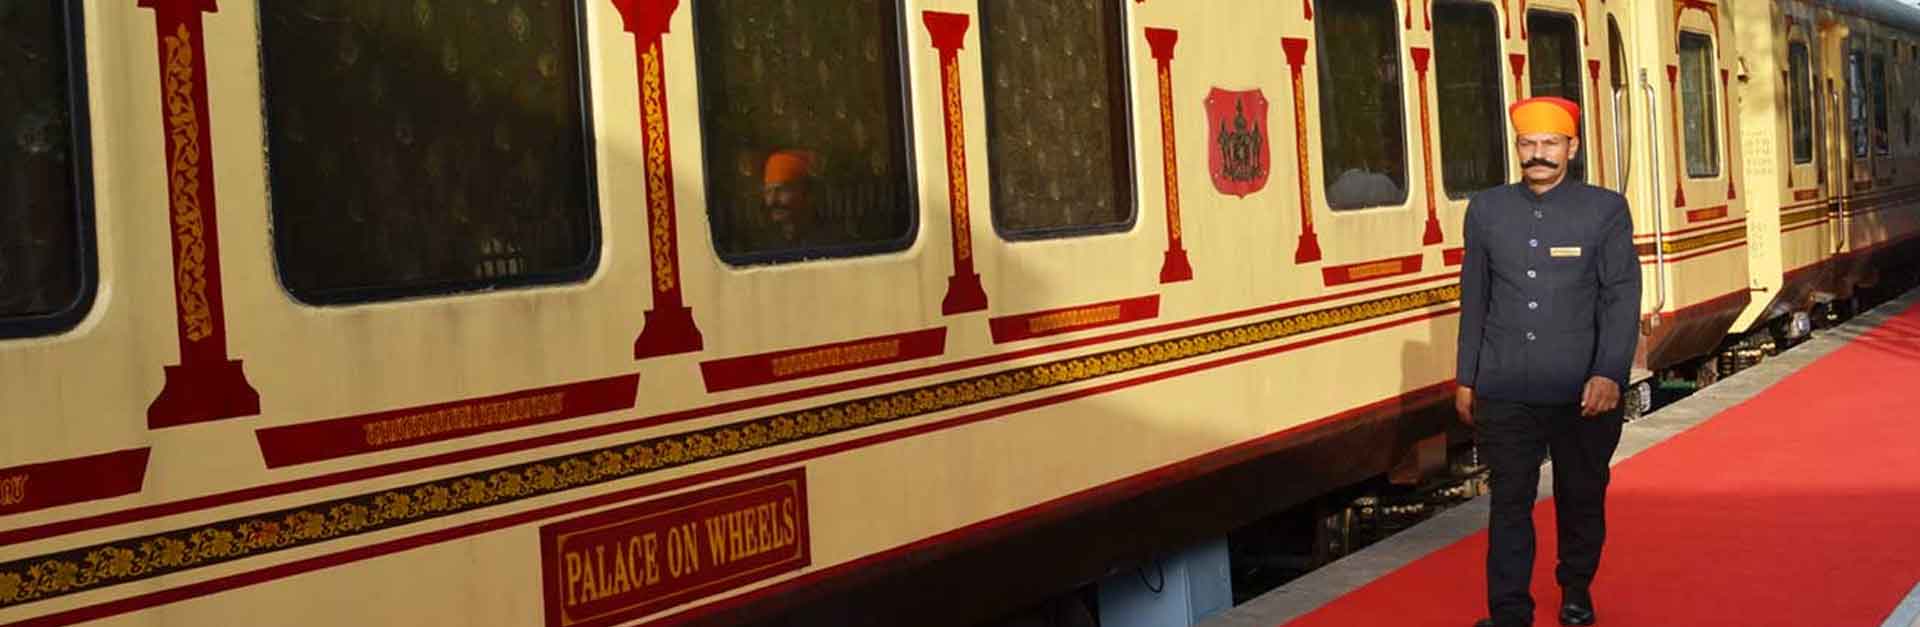 rajasthan train palace on wheels